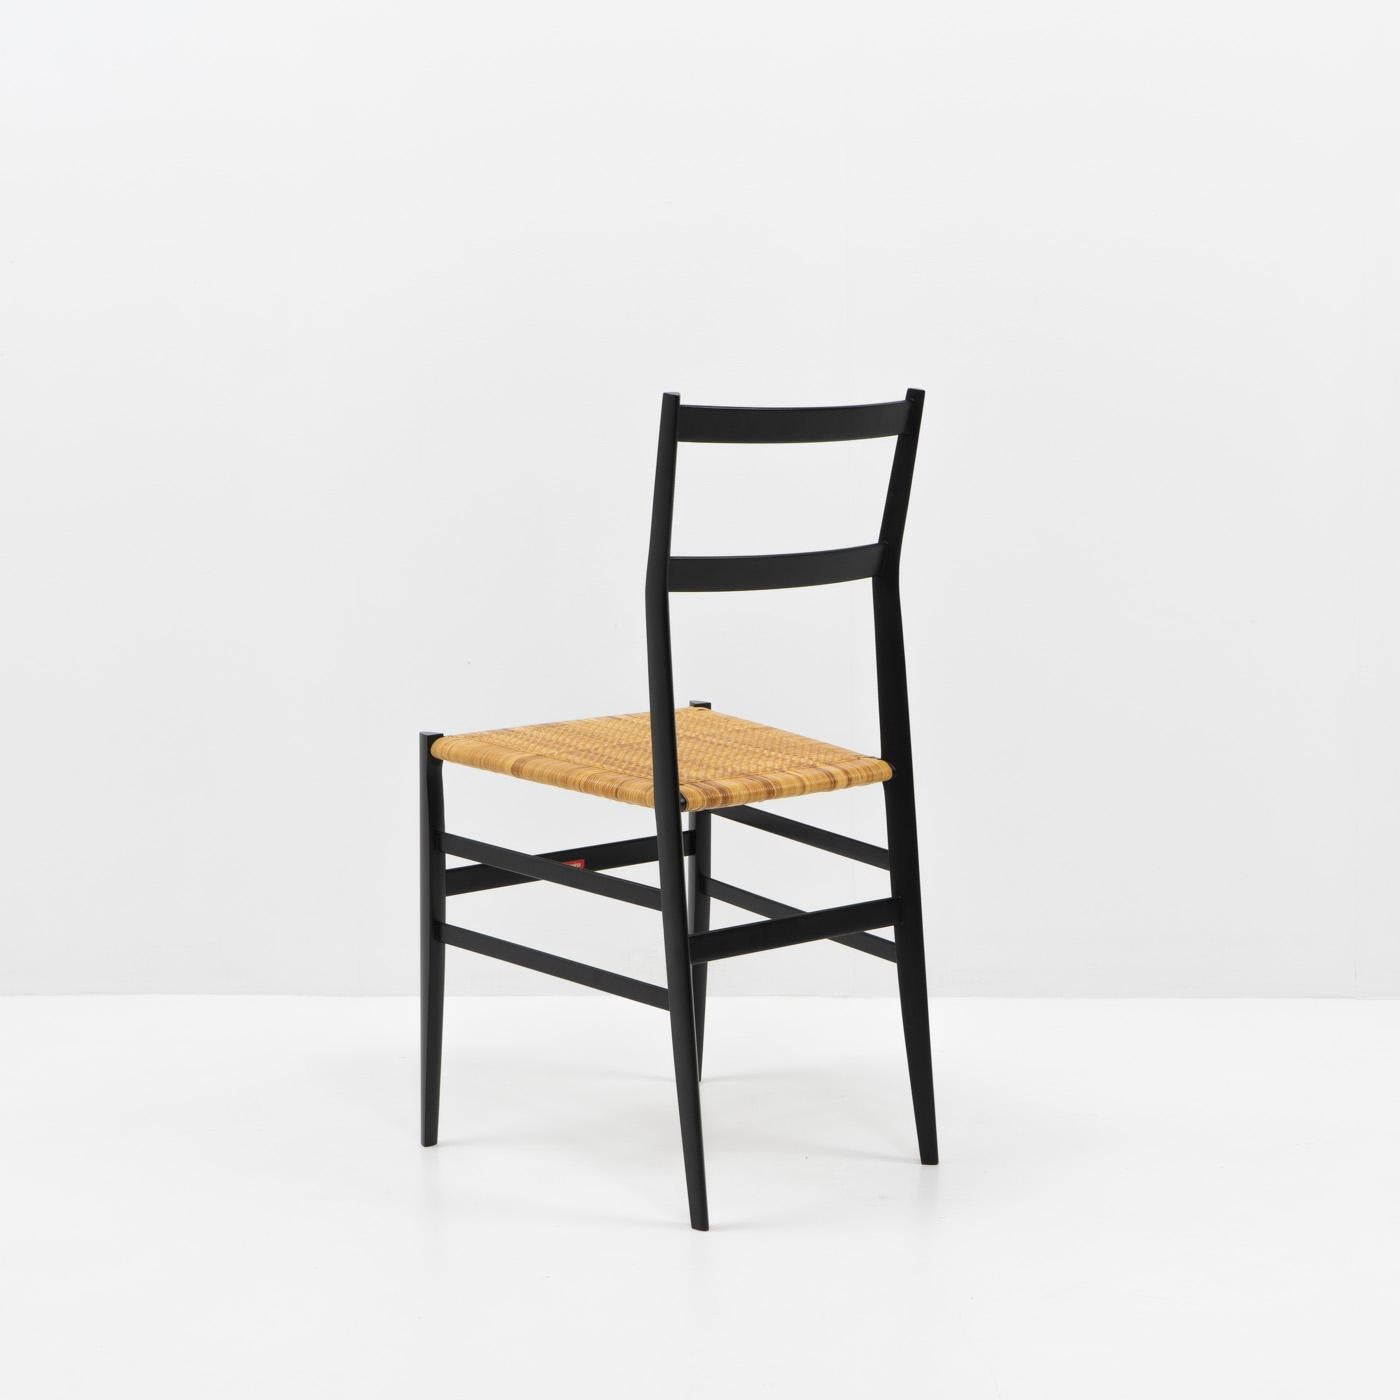 Italian Design Classic Gio Ponti, Superleggera Chair, Cassina, 2000s For Sale 5